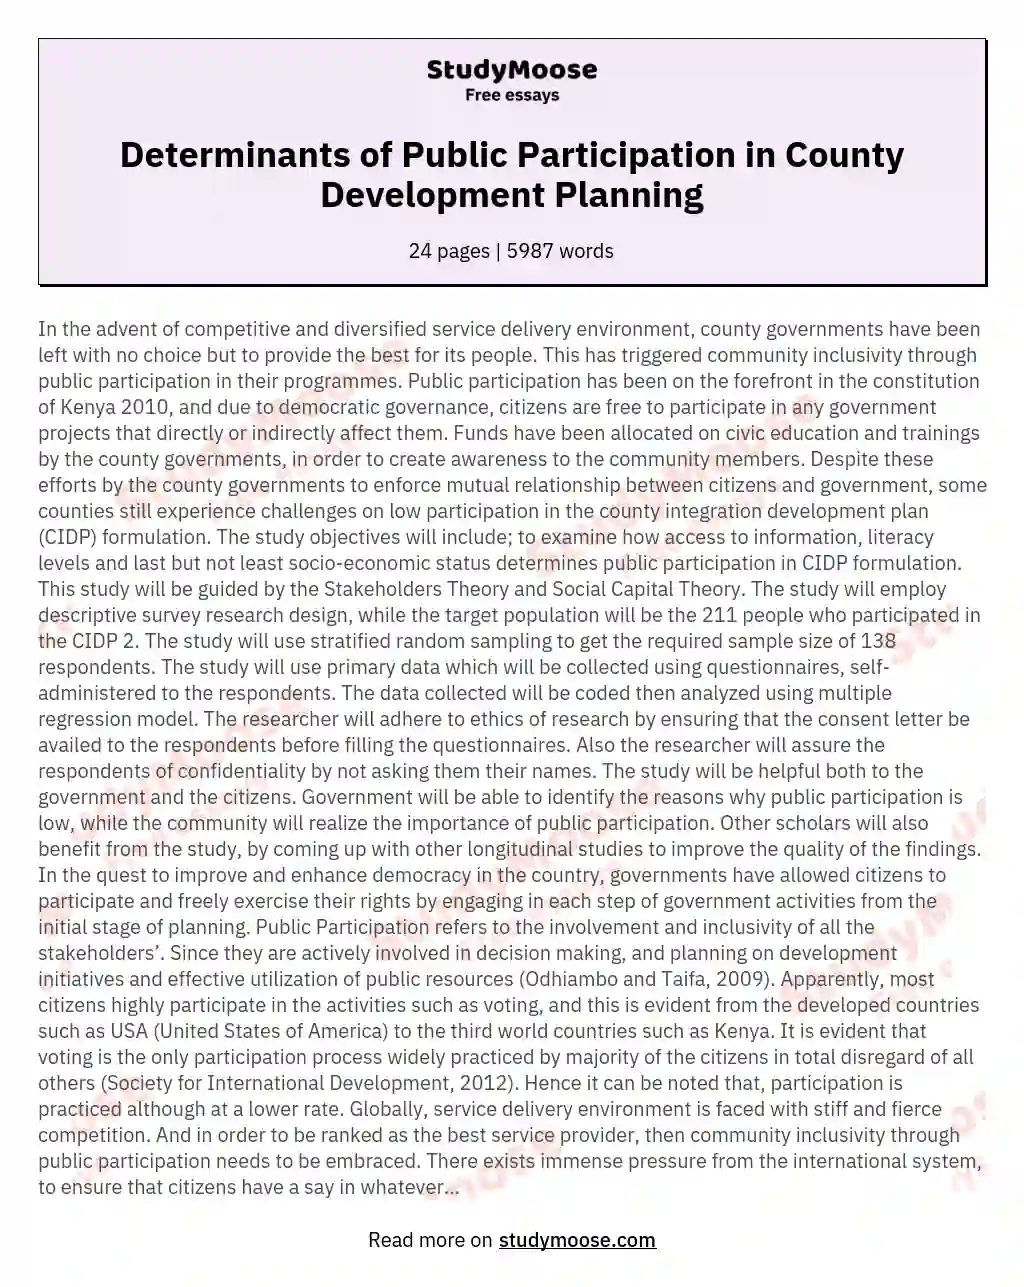 Determinants of Public Participation in County Development Planning essay